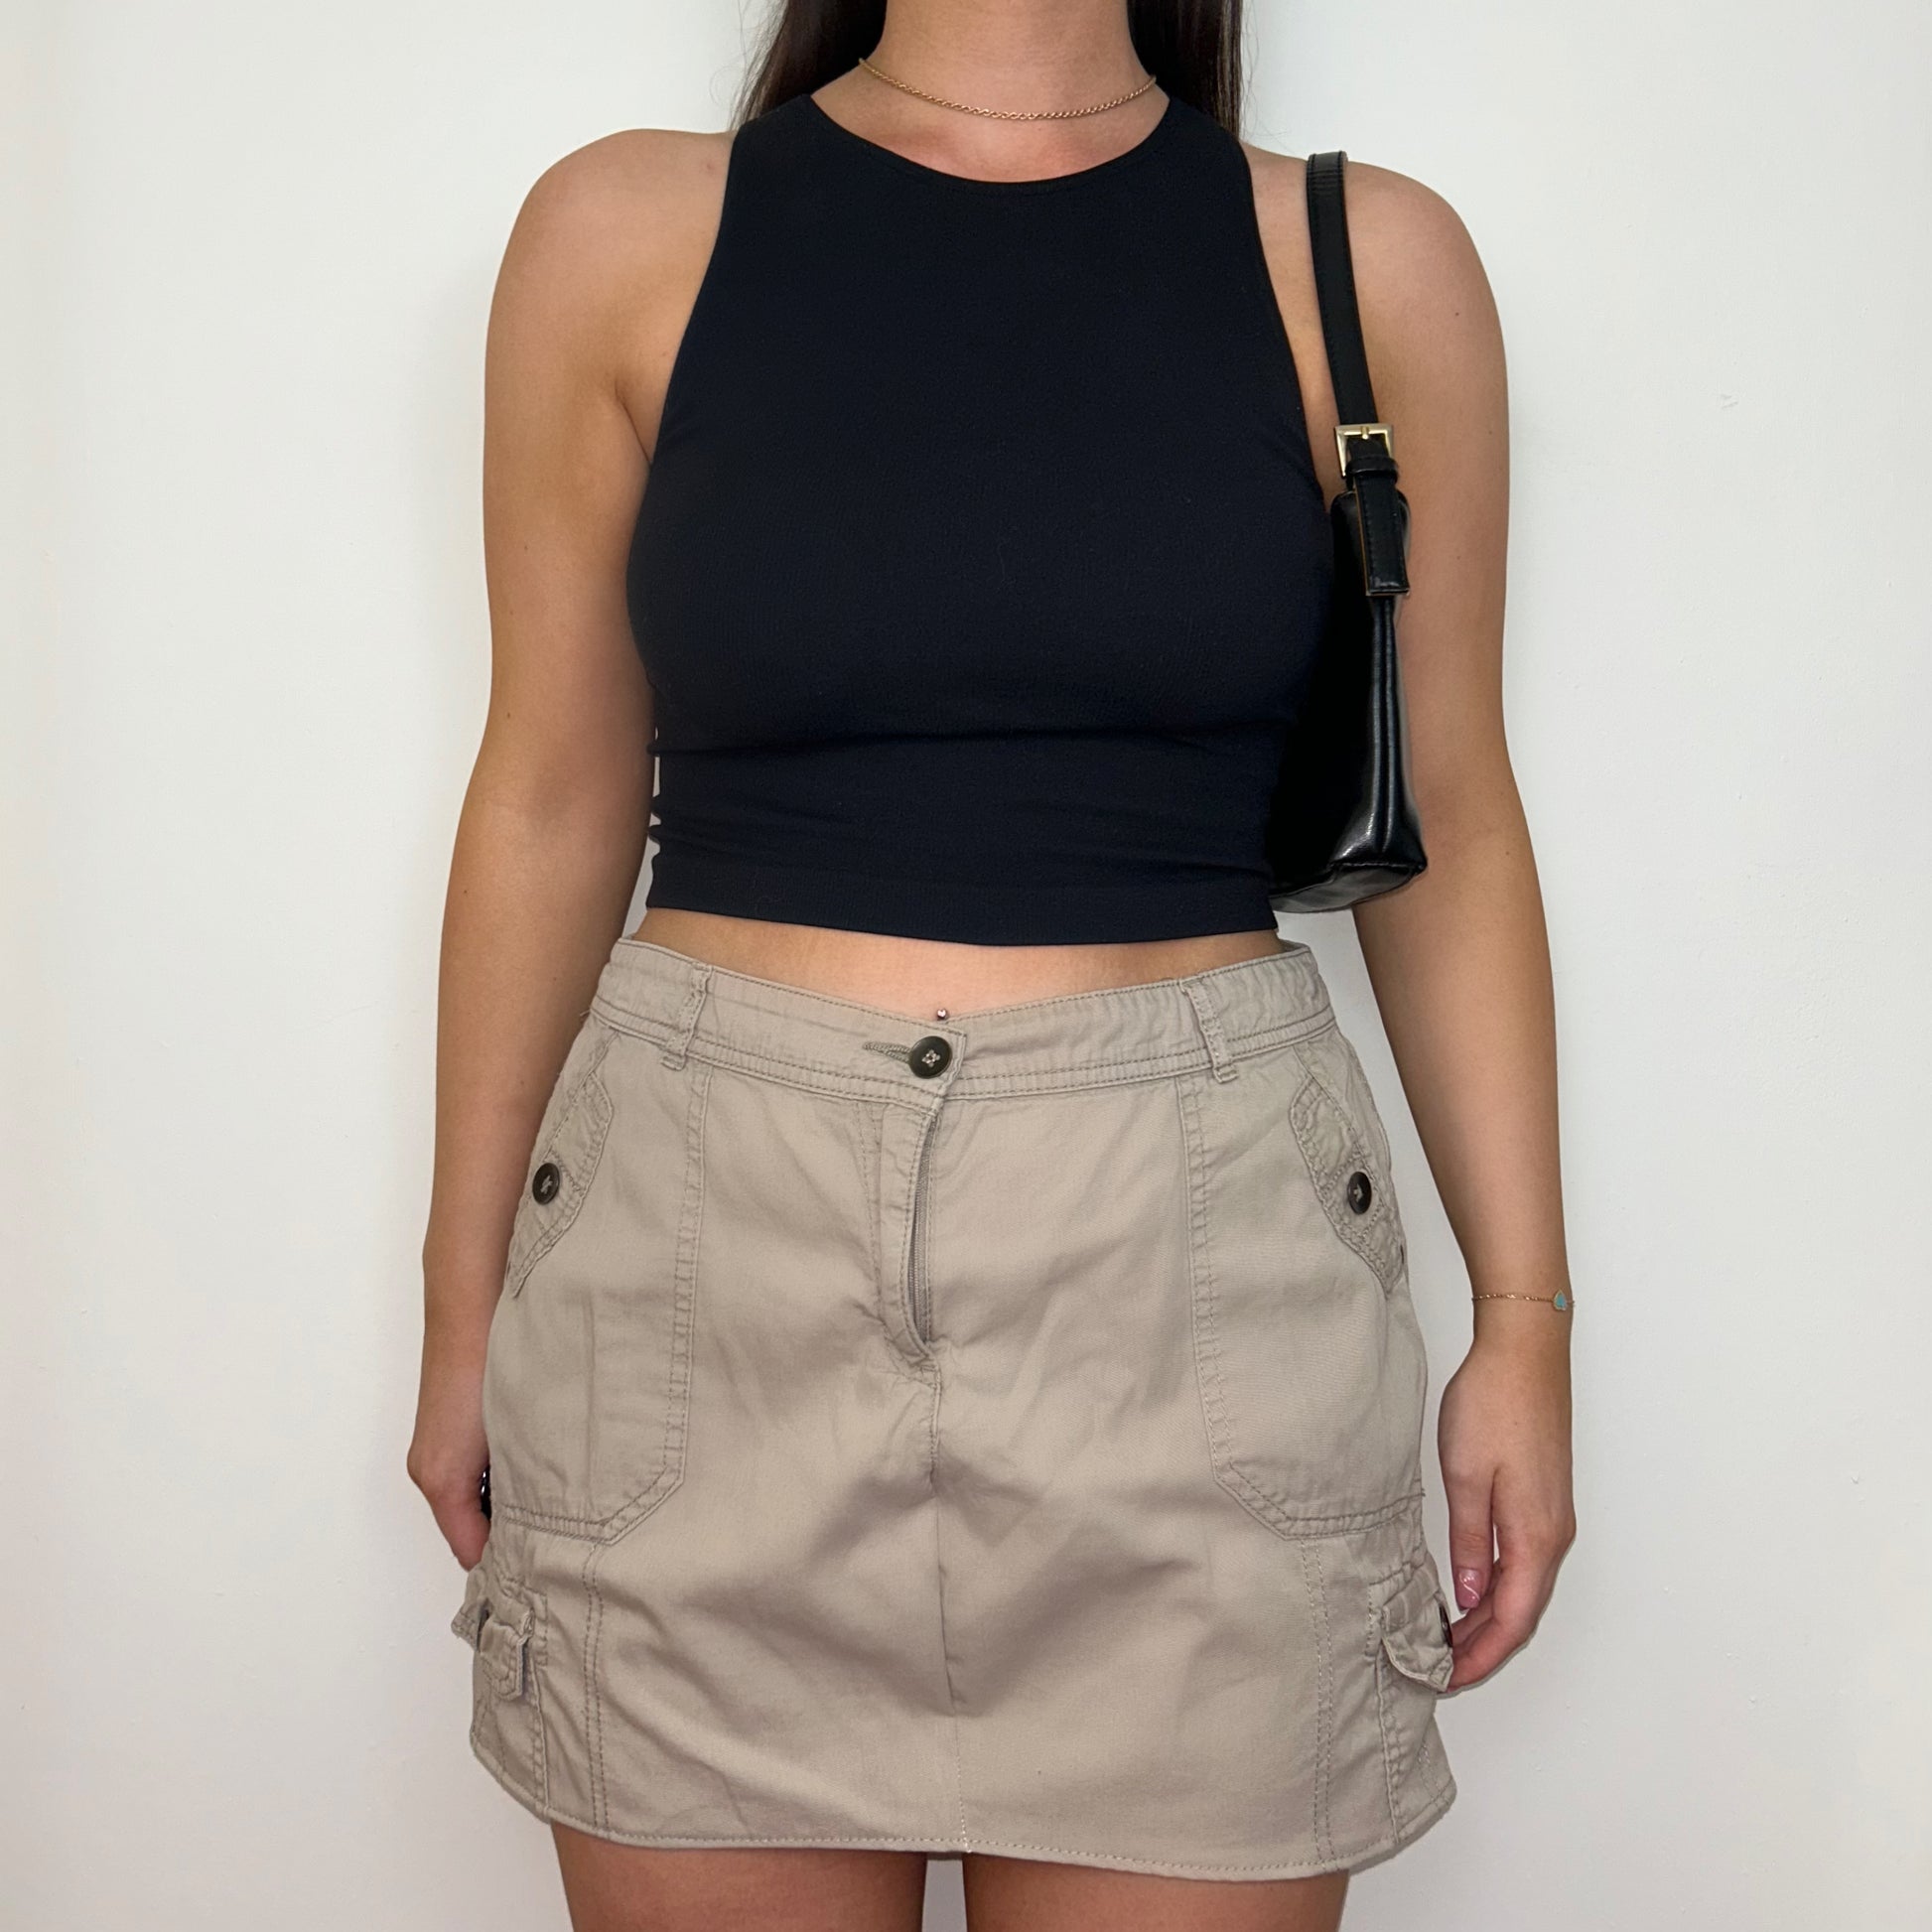 beige cargo mini skirt shown on a model wearing a black crop top and black shoulder bag